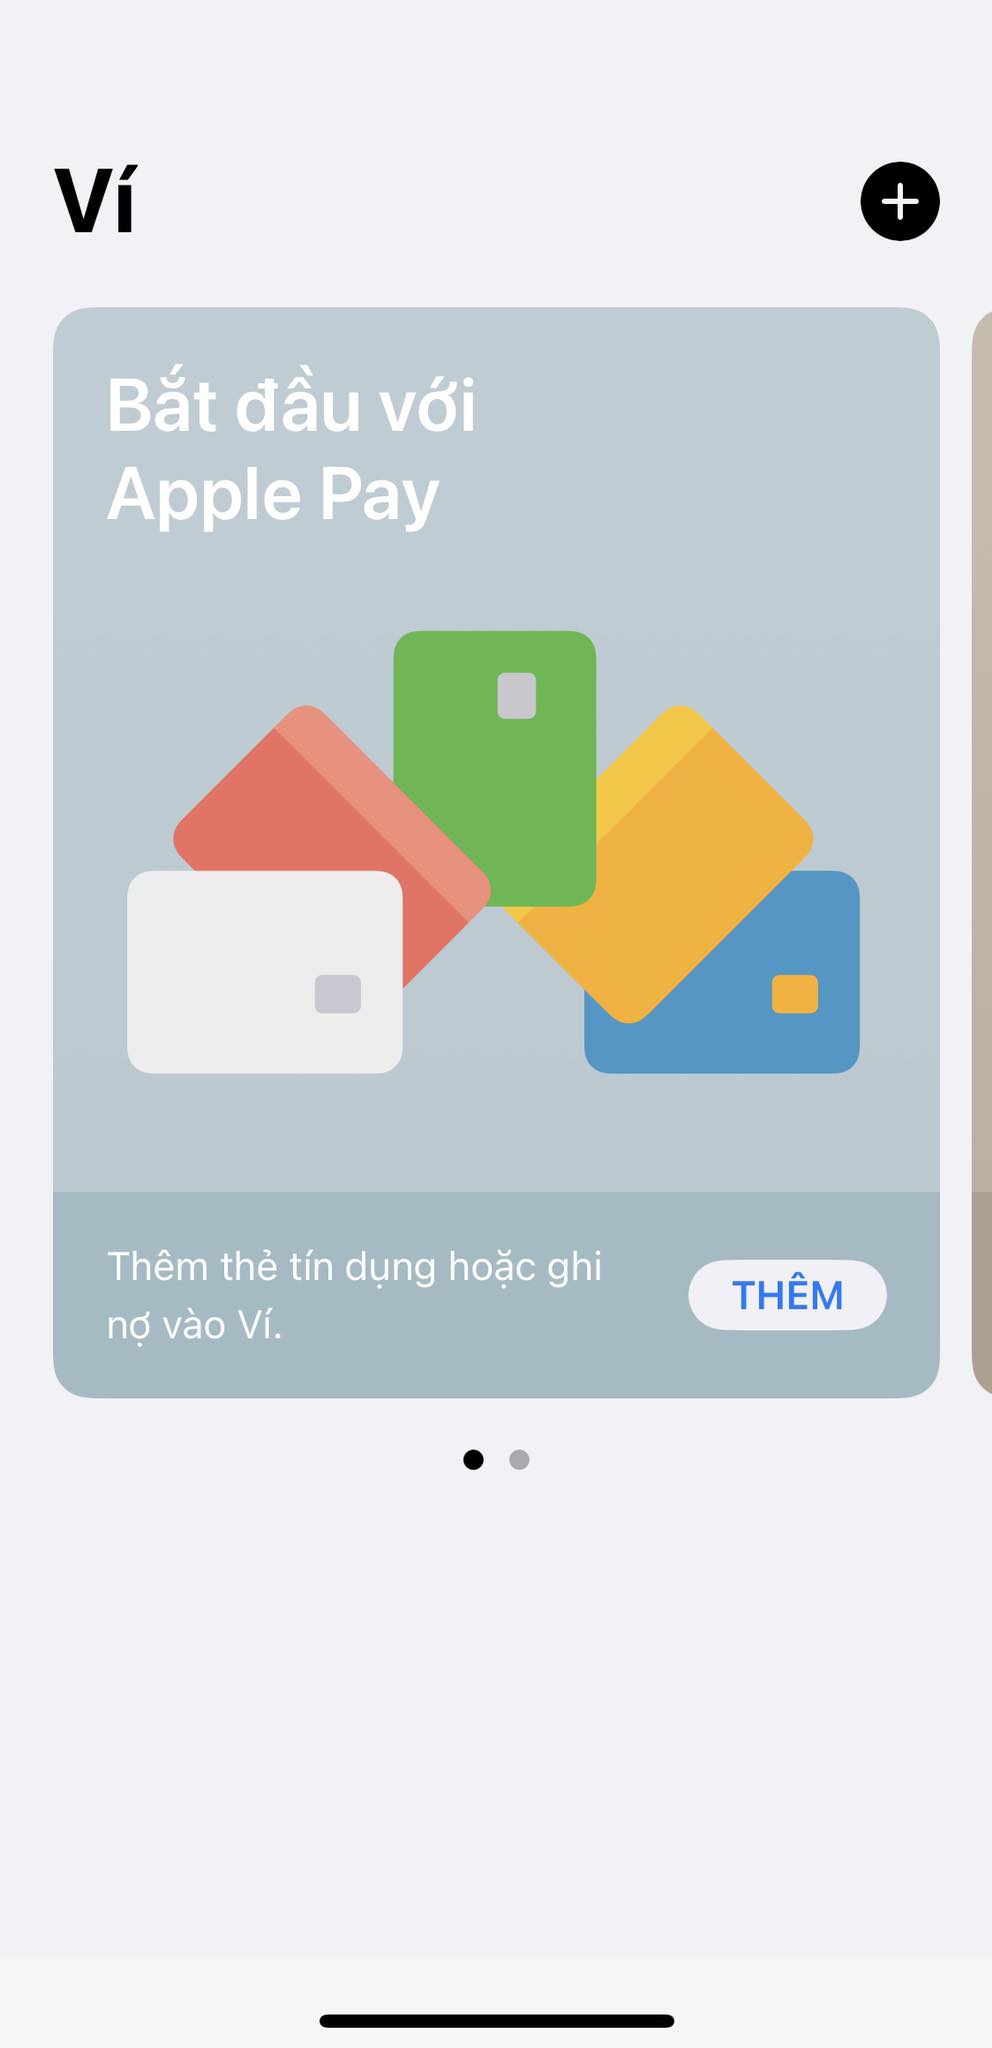 Mở Apple Wallet để kích hoạt Apple Pay.